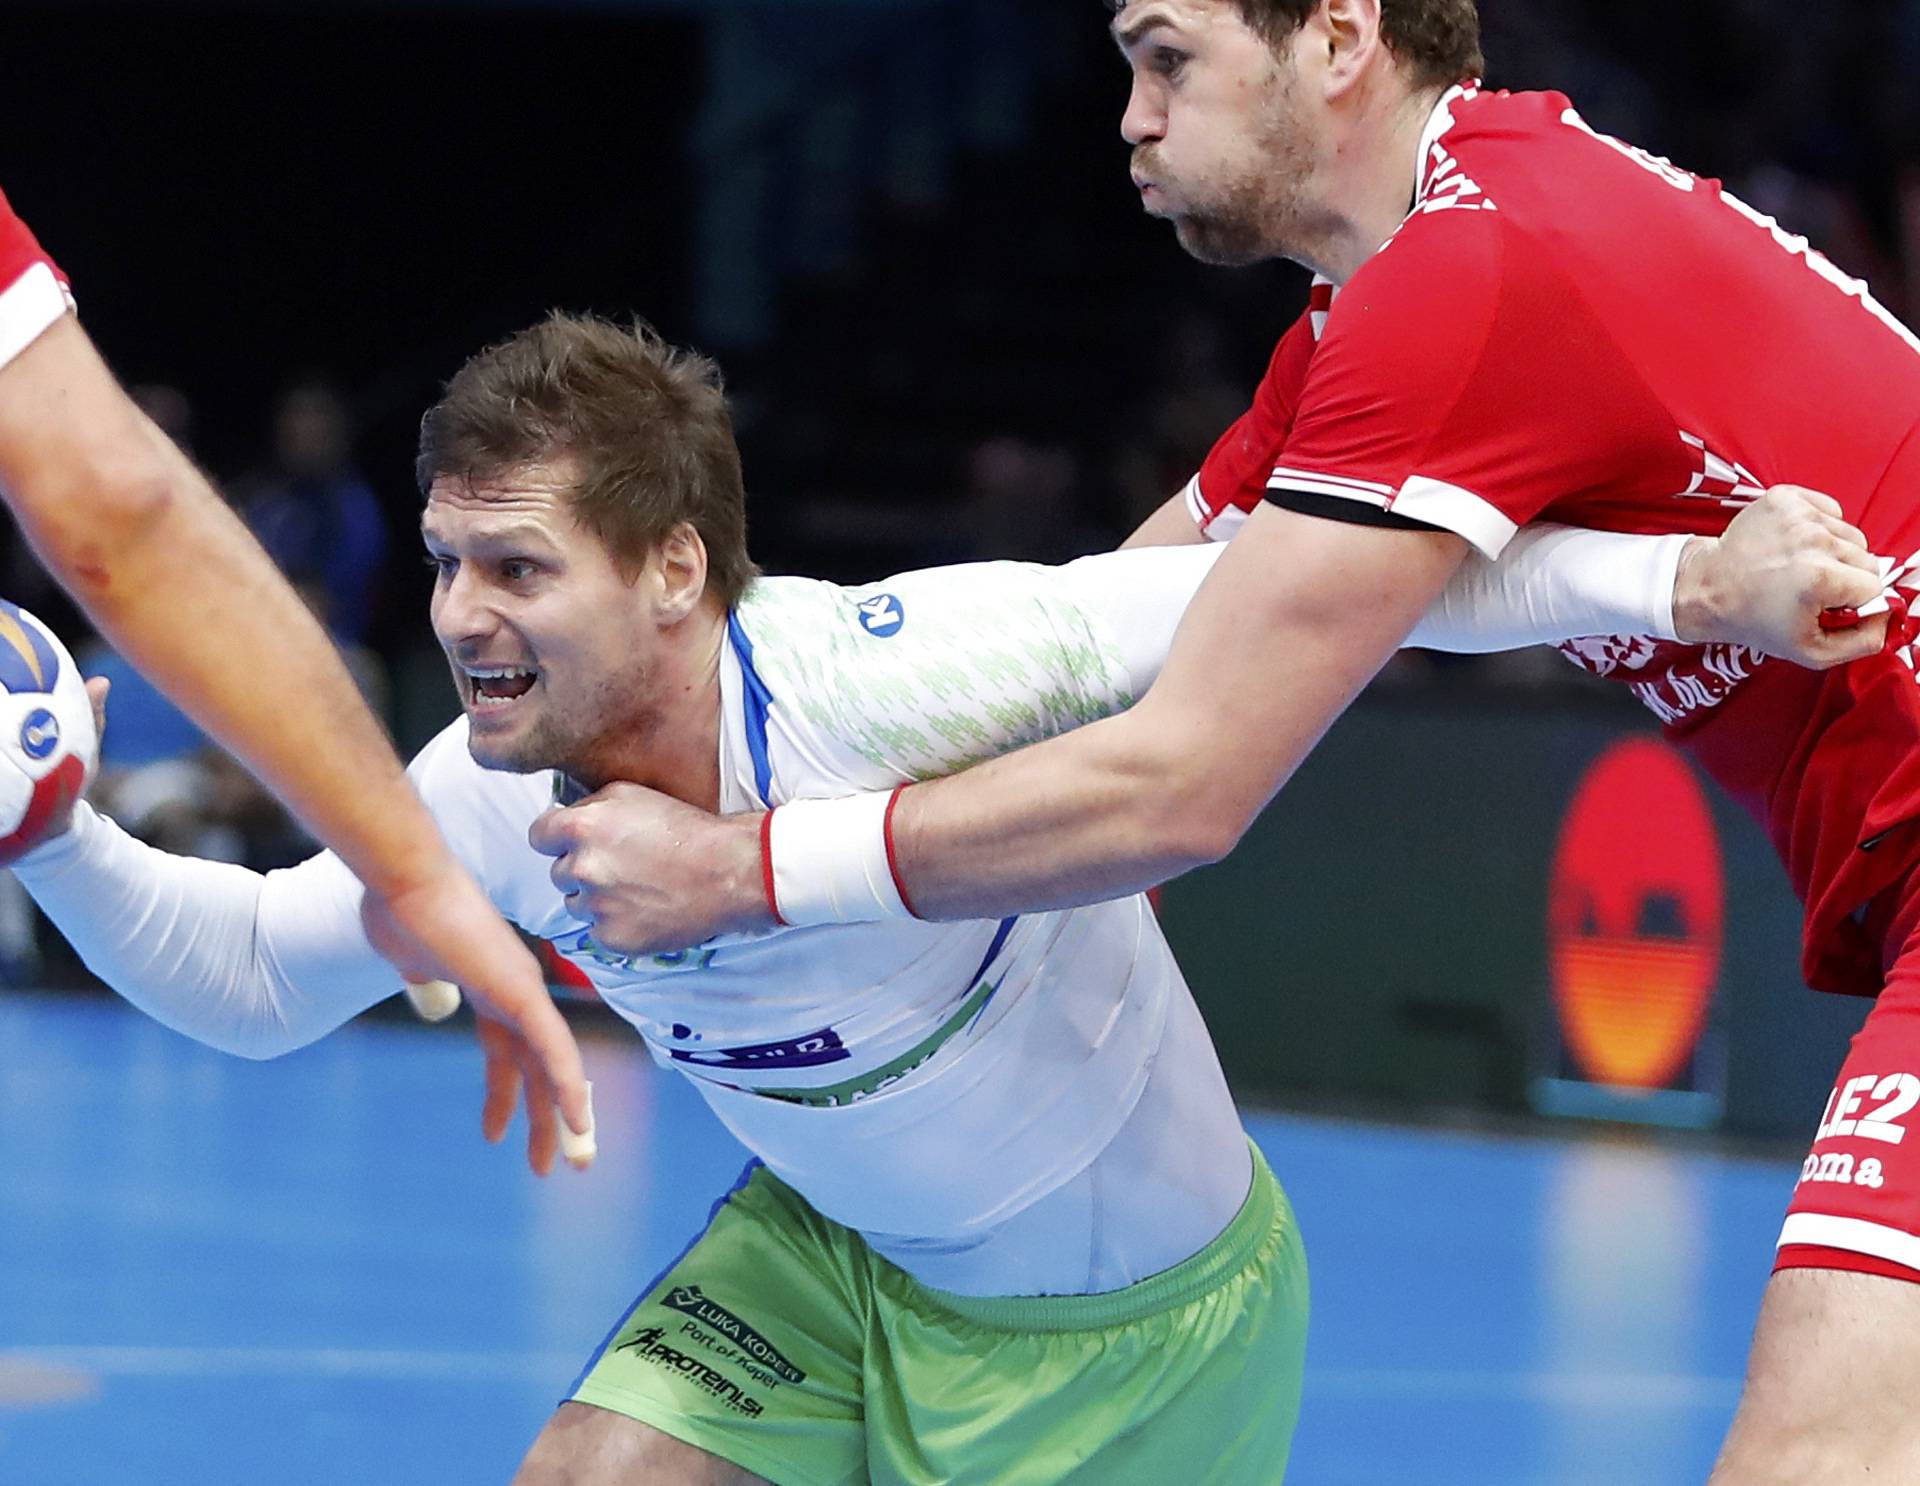 Men's Handball - Slovenia v Croatia - 2017 Men's World Championship, Bronze Medal